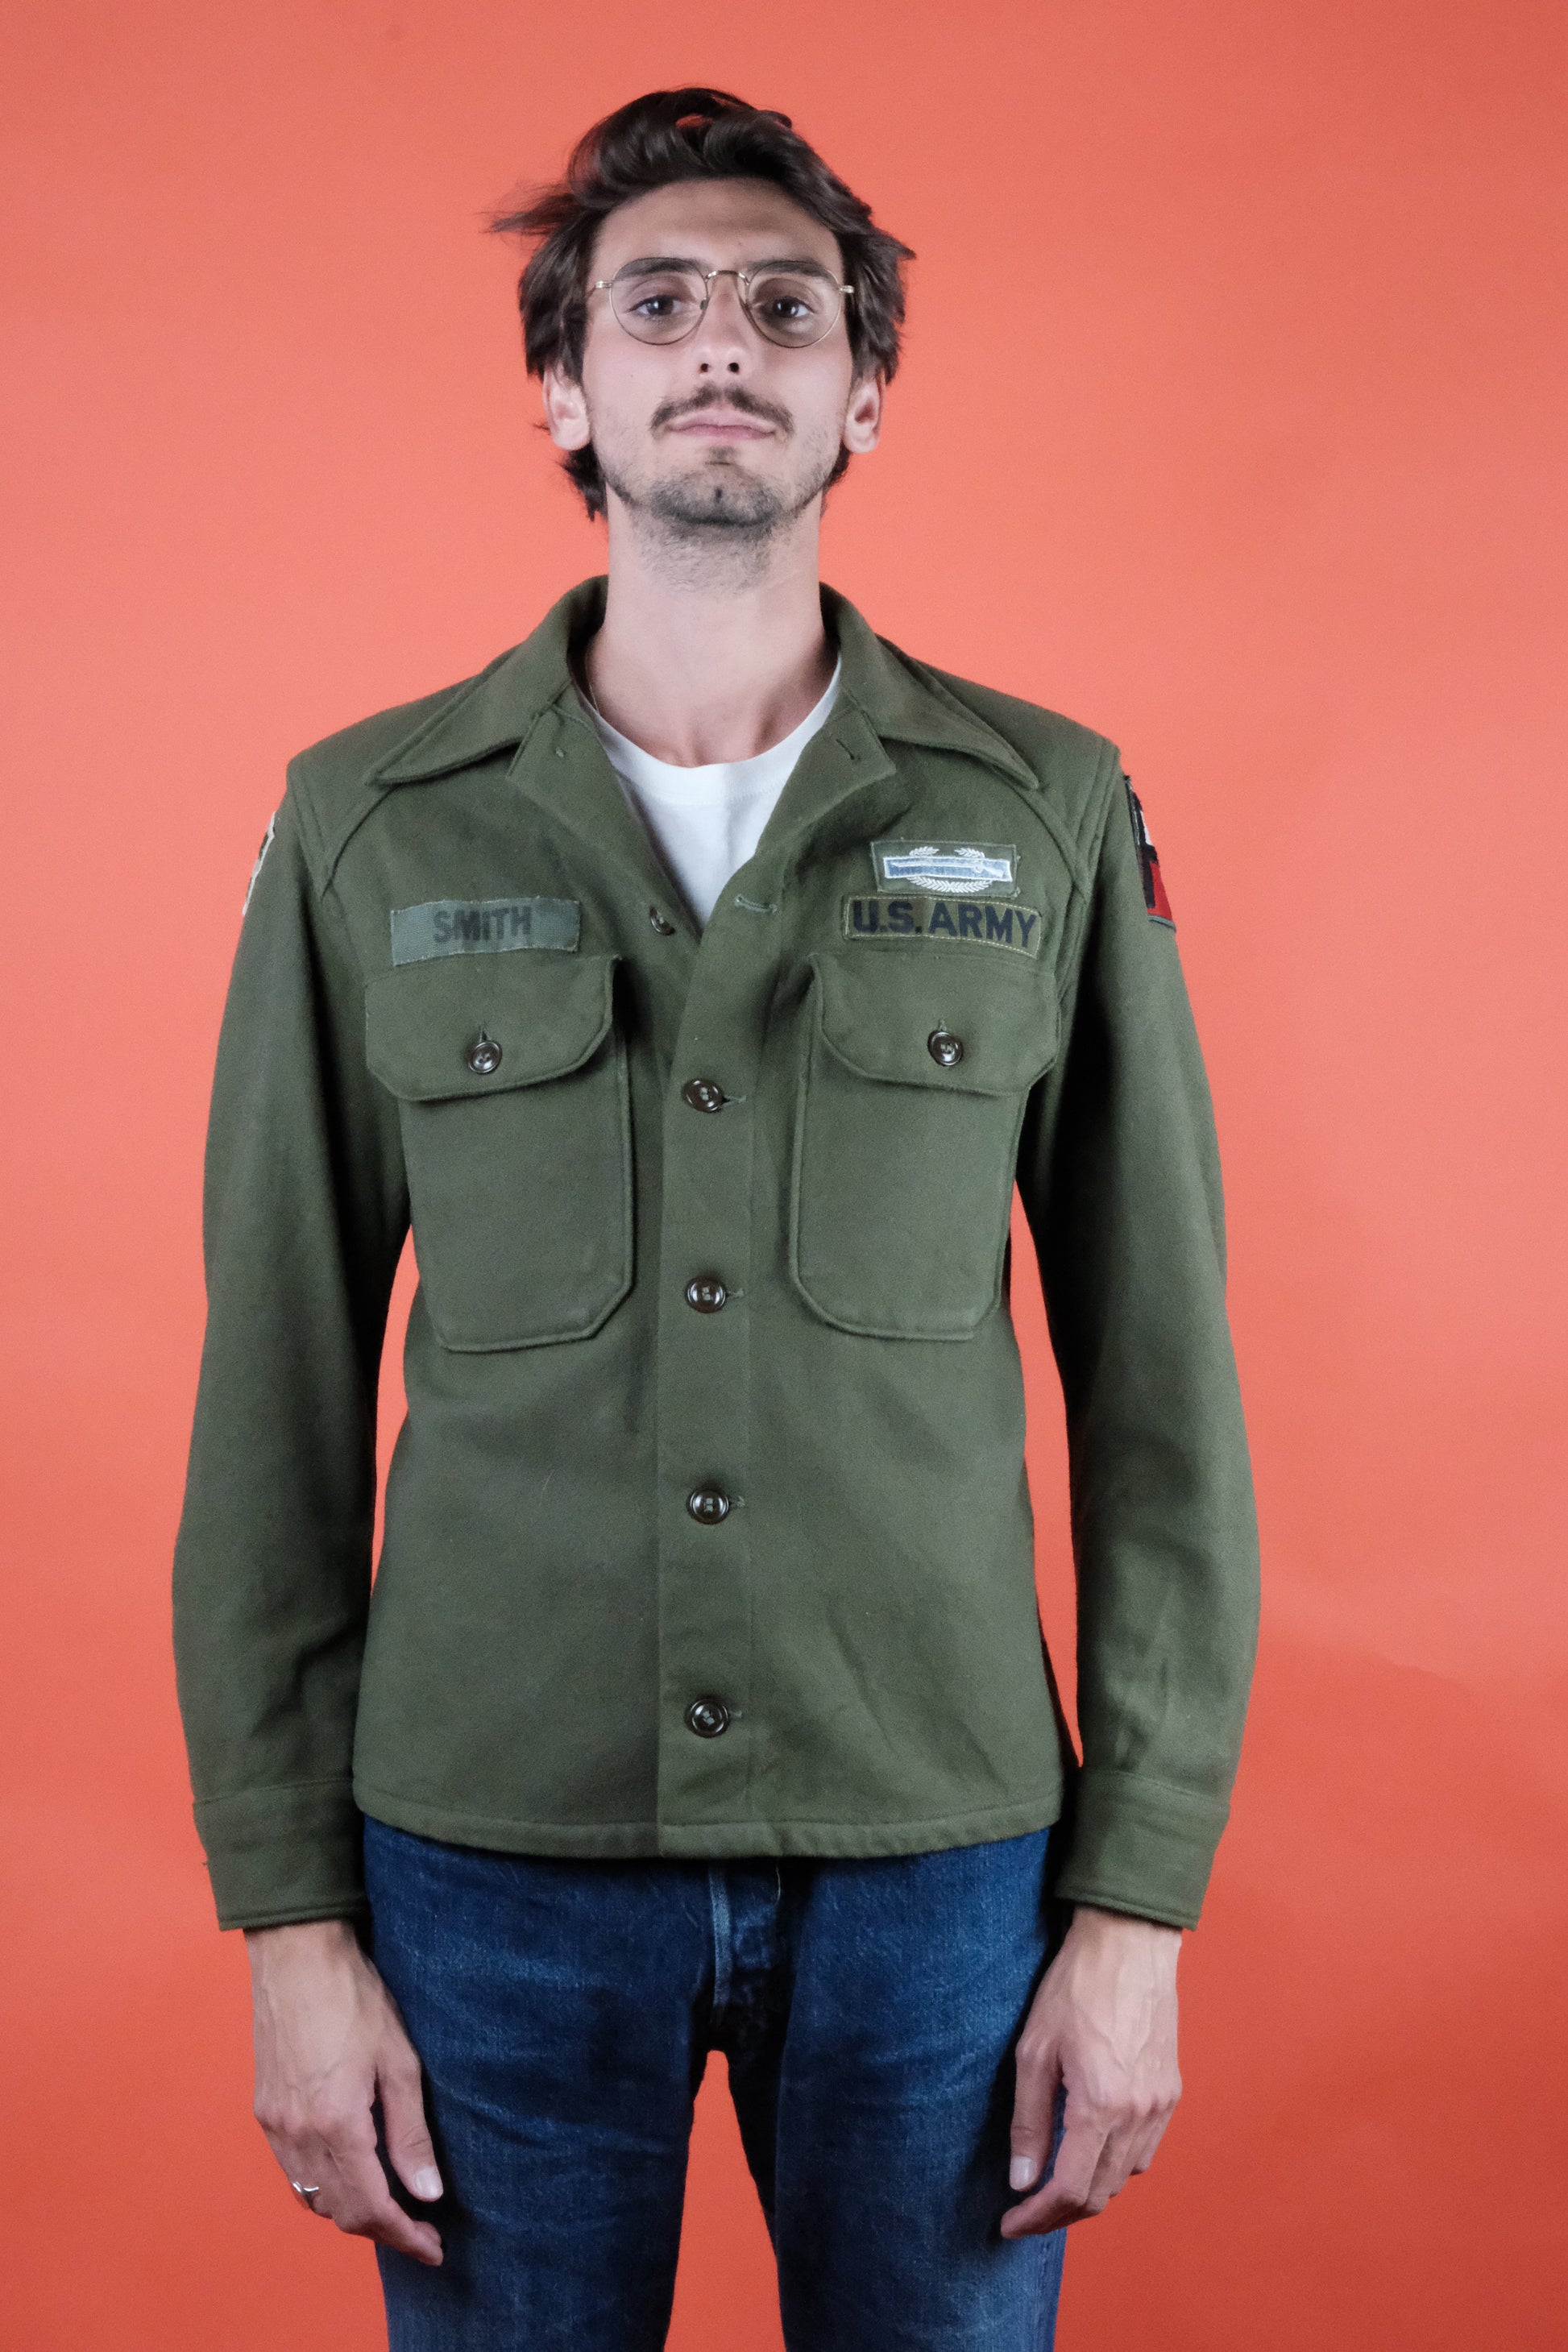 US army OG-108 Shirt - Vintage clothing clochard92.com